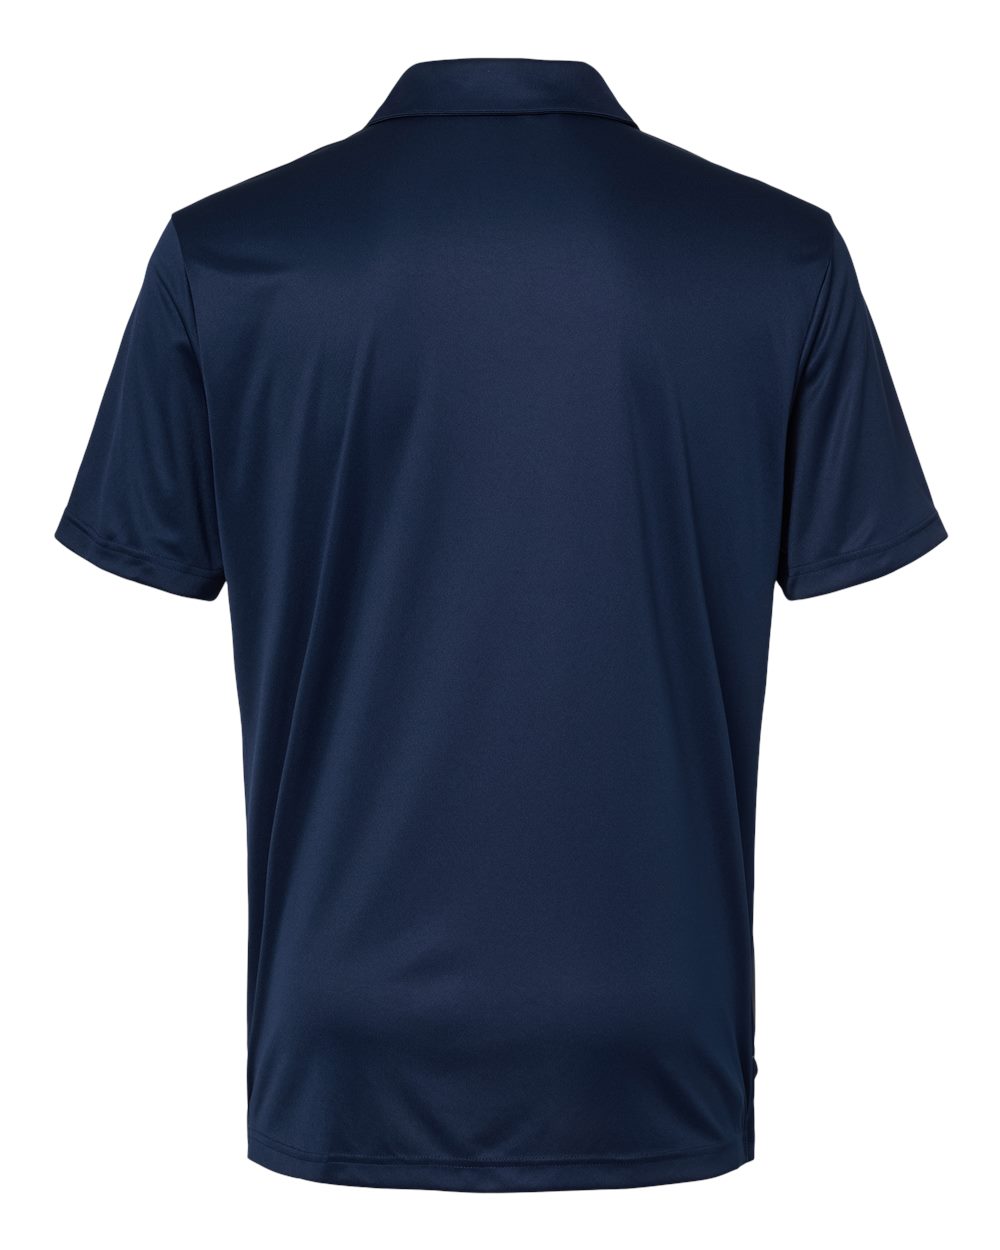 Adidas Mens Polo Collar Merch Block Sport Shirt A236 up to 4XL | eBay